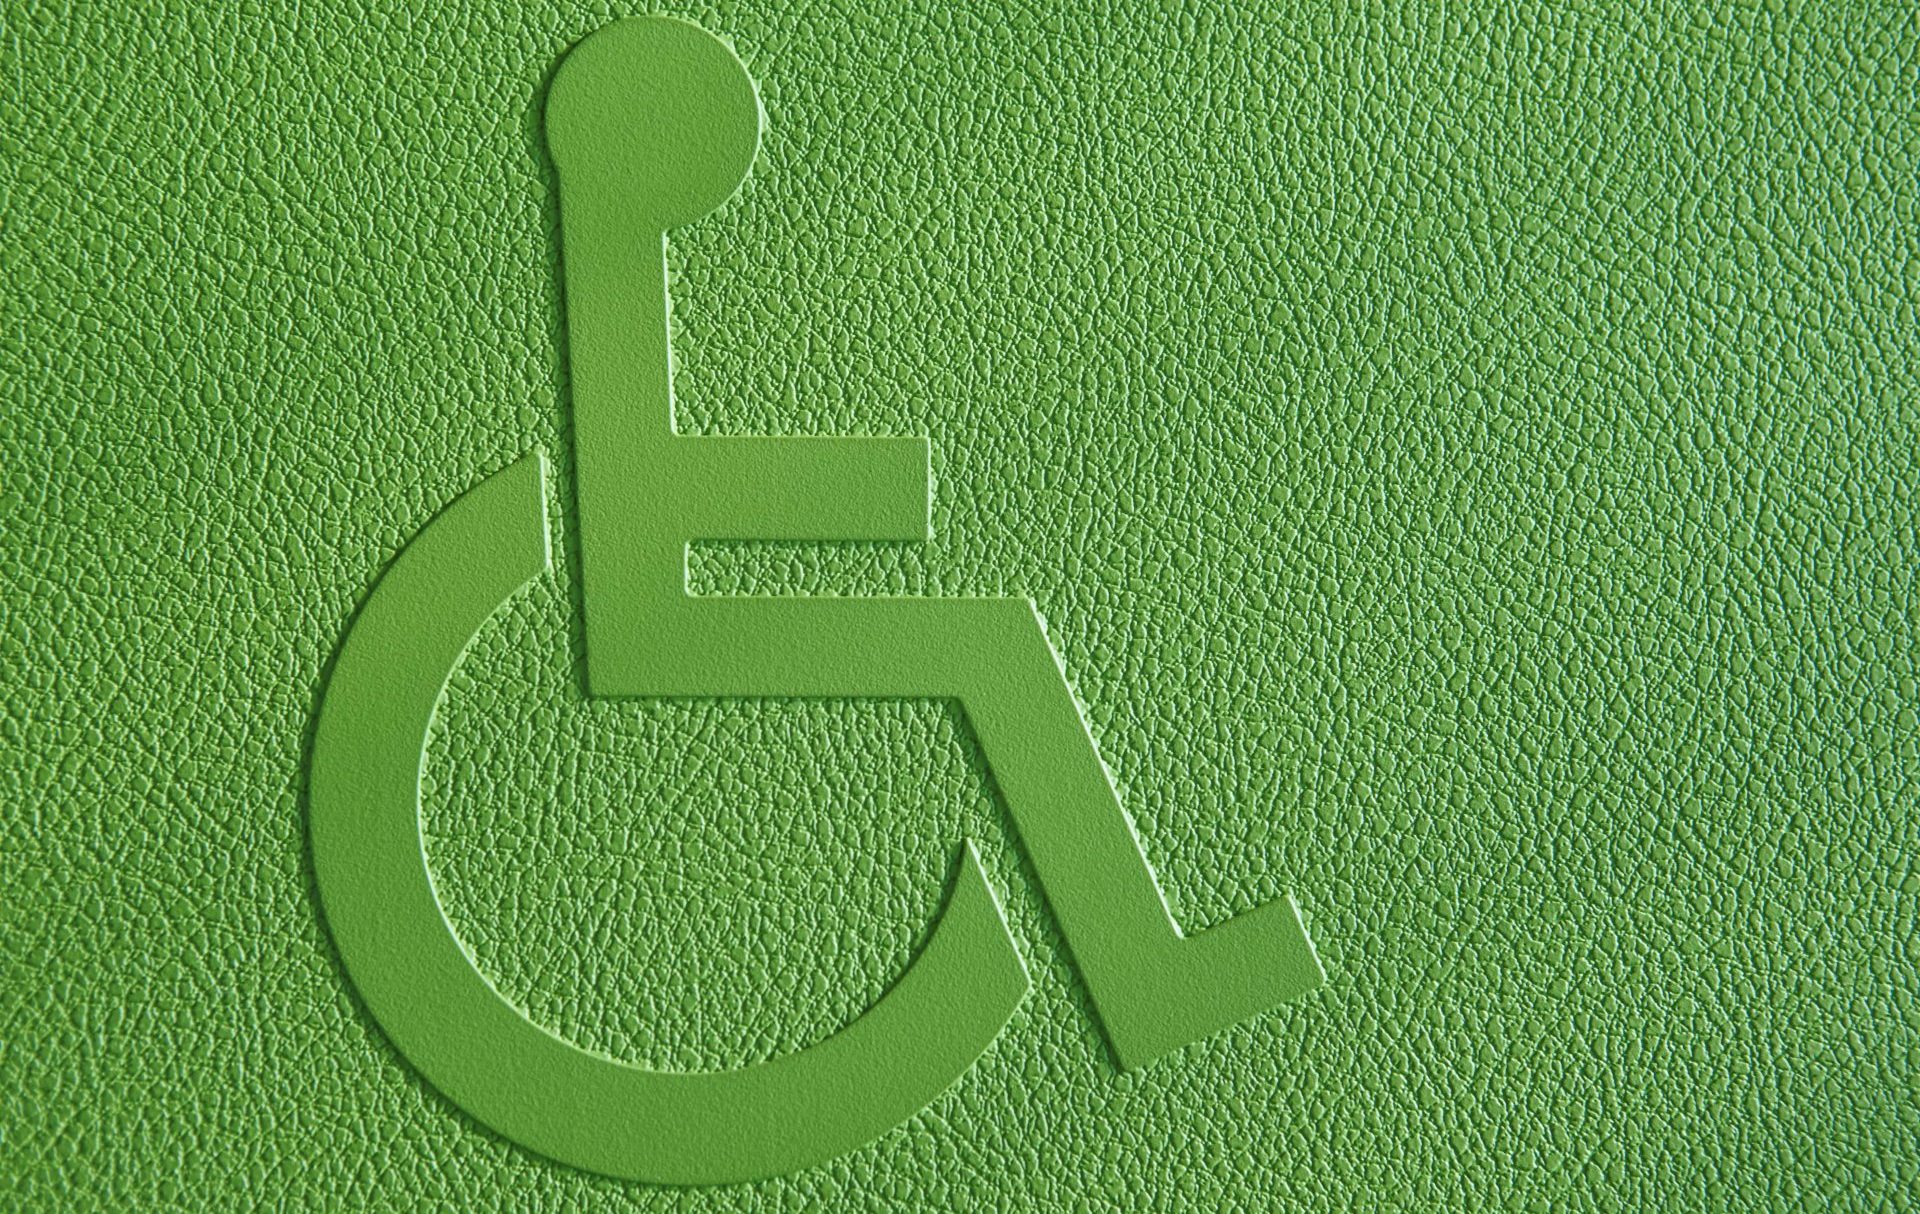 disabled-symbol-on-a-green-textured-background-PRRLPLM-min